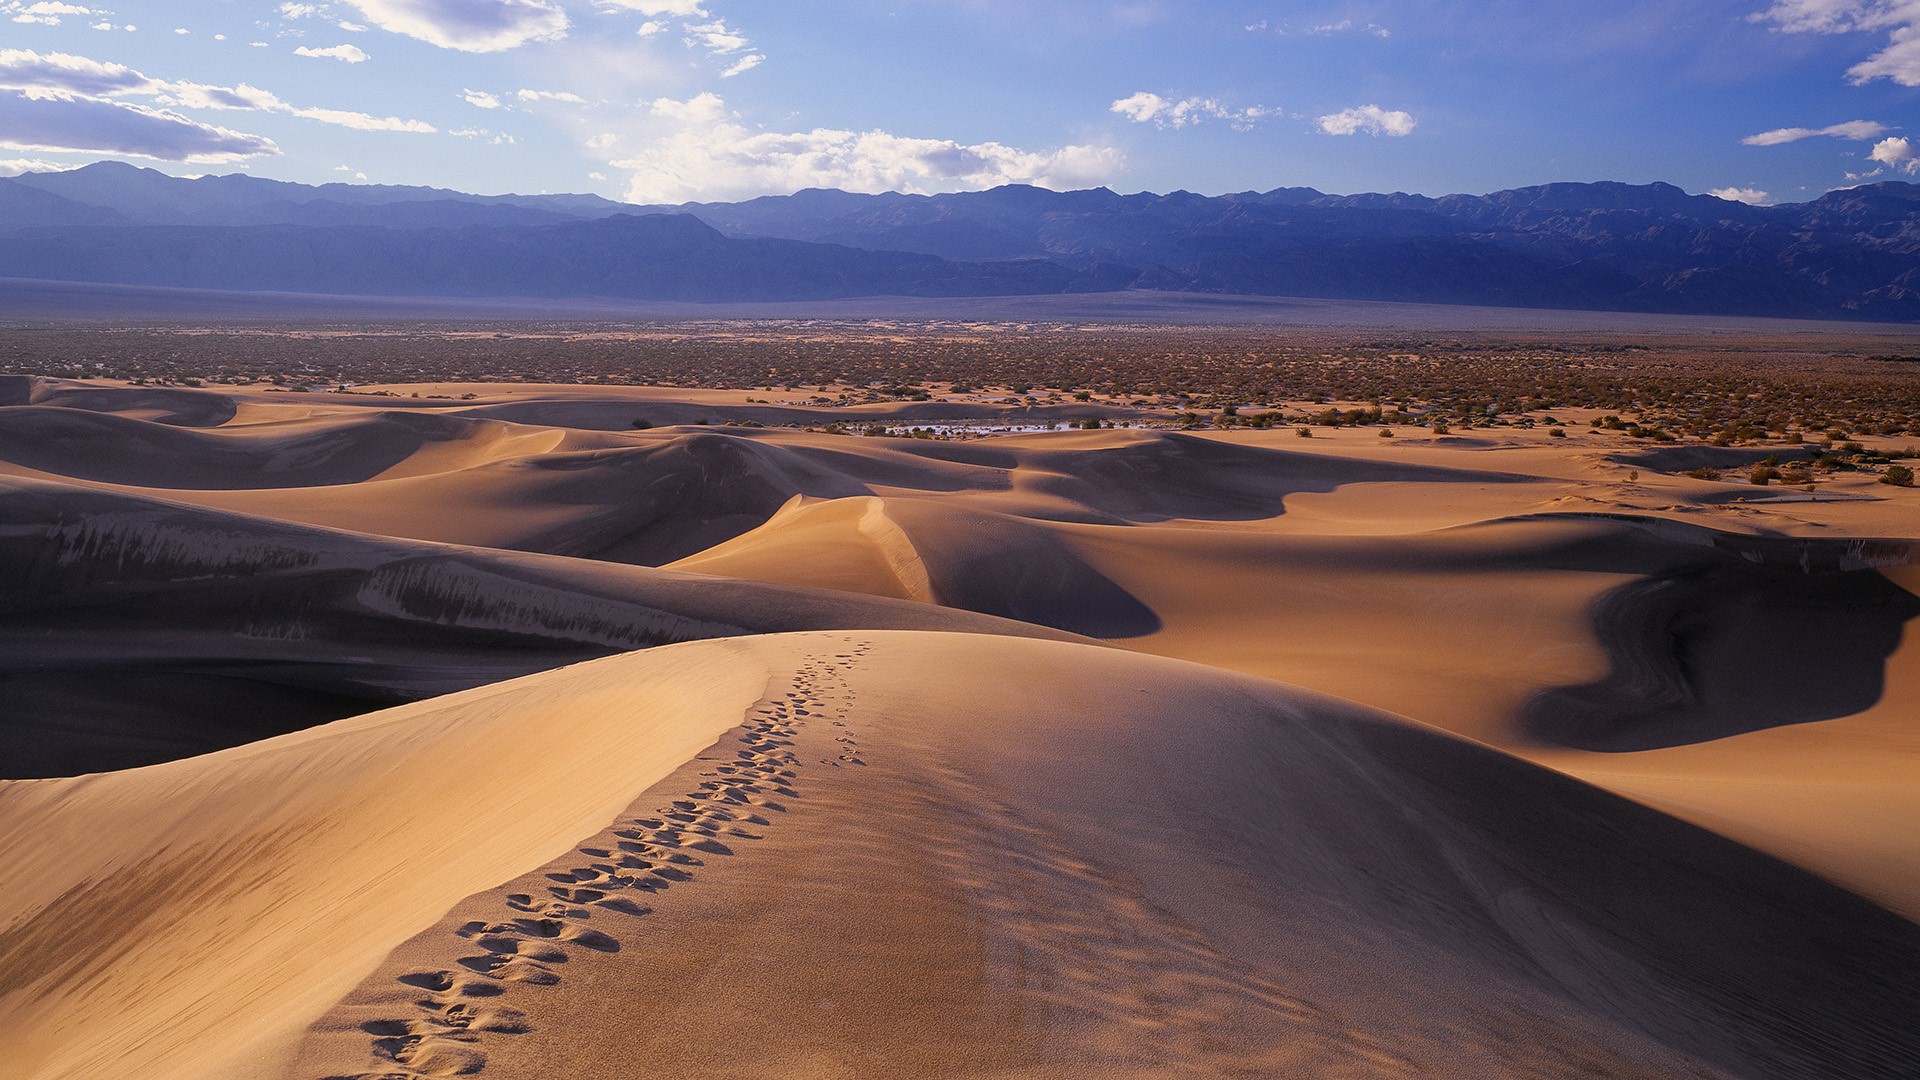 General 1920x1080 nature landscape desert mountains clouds dunes Death Valley California USA